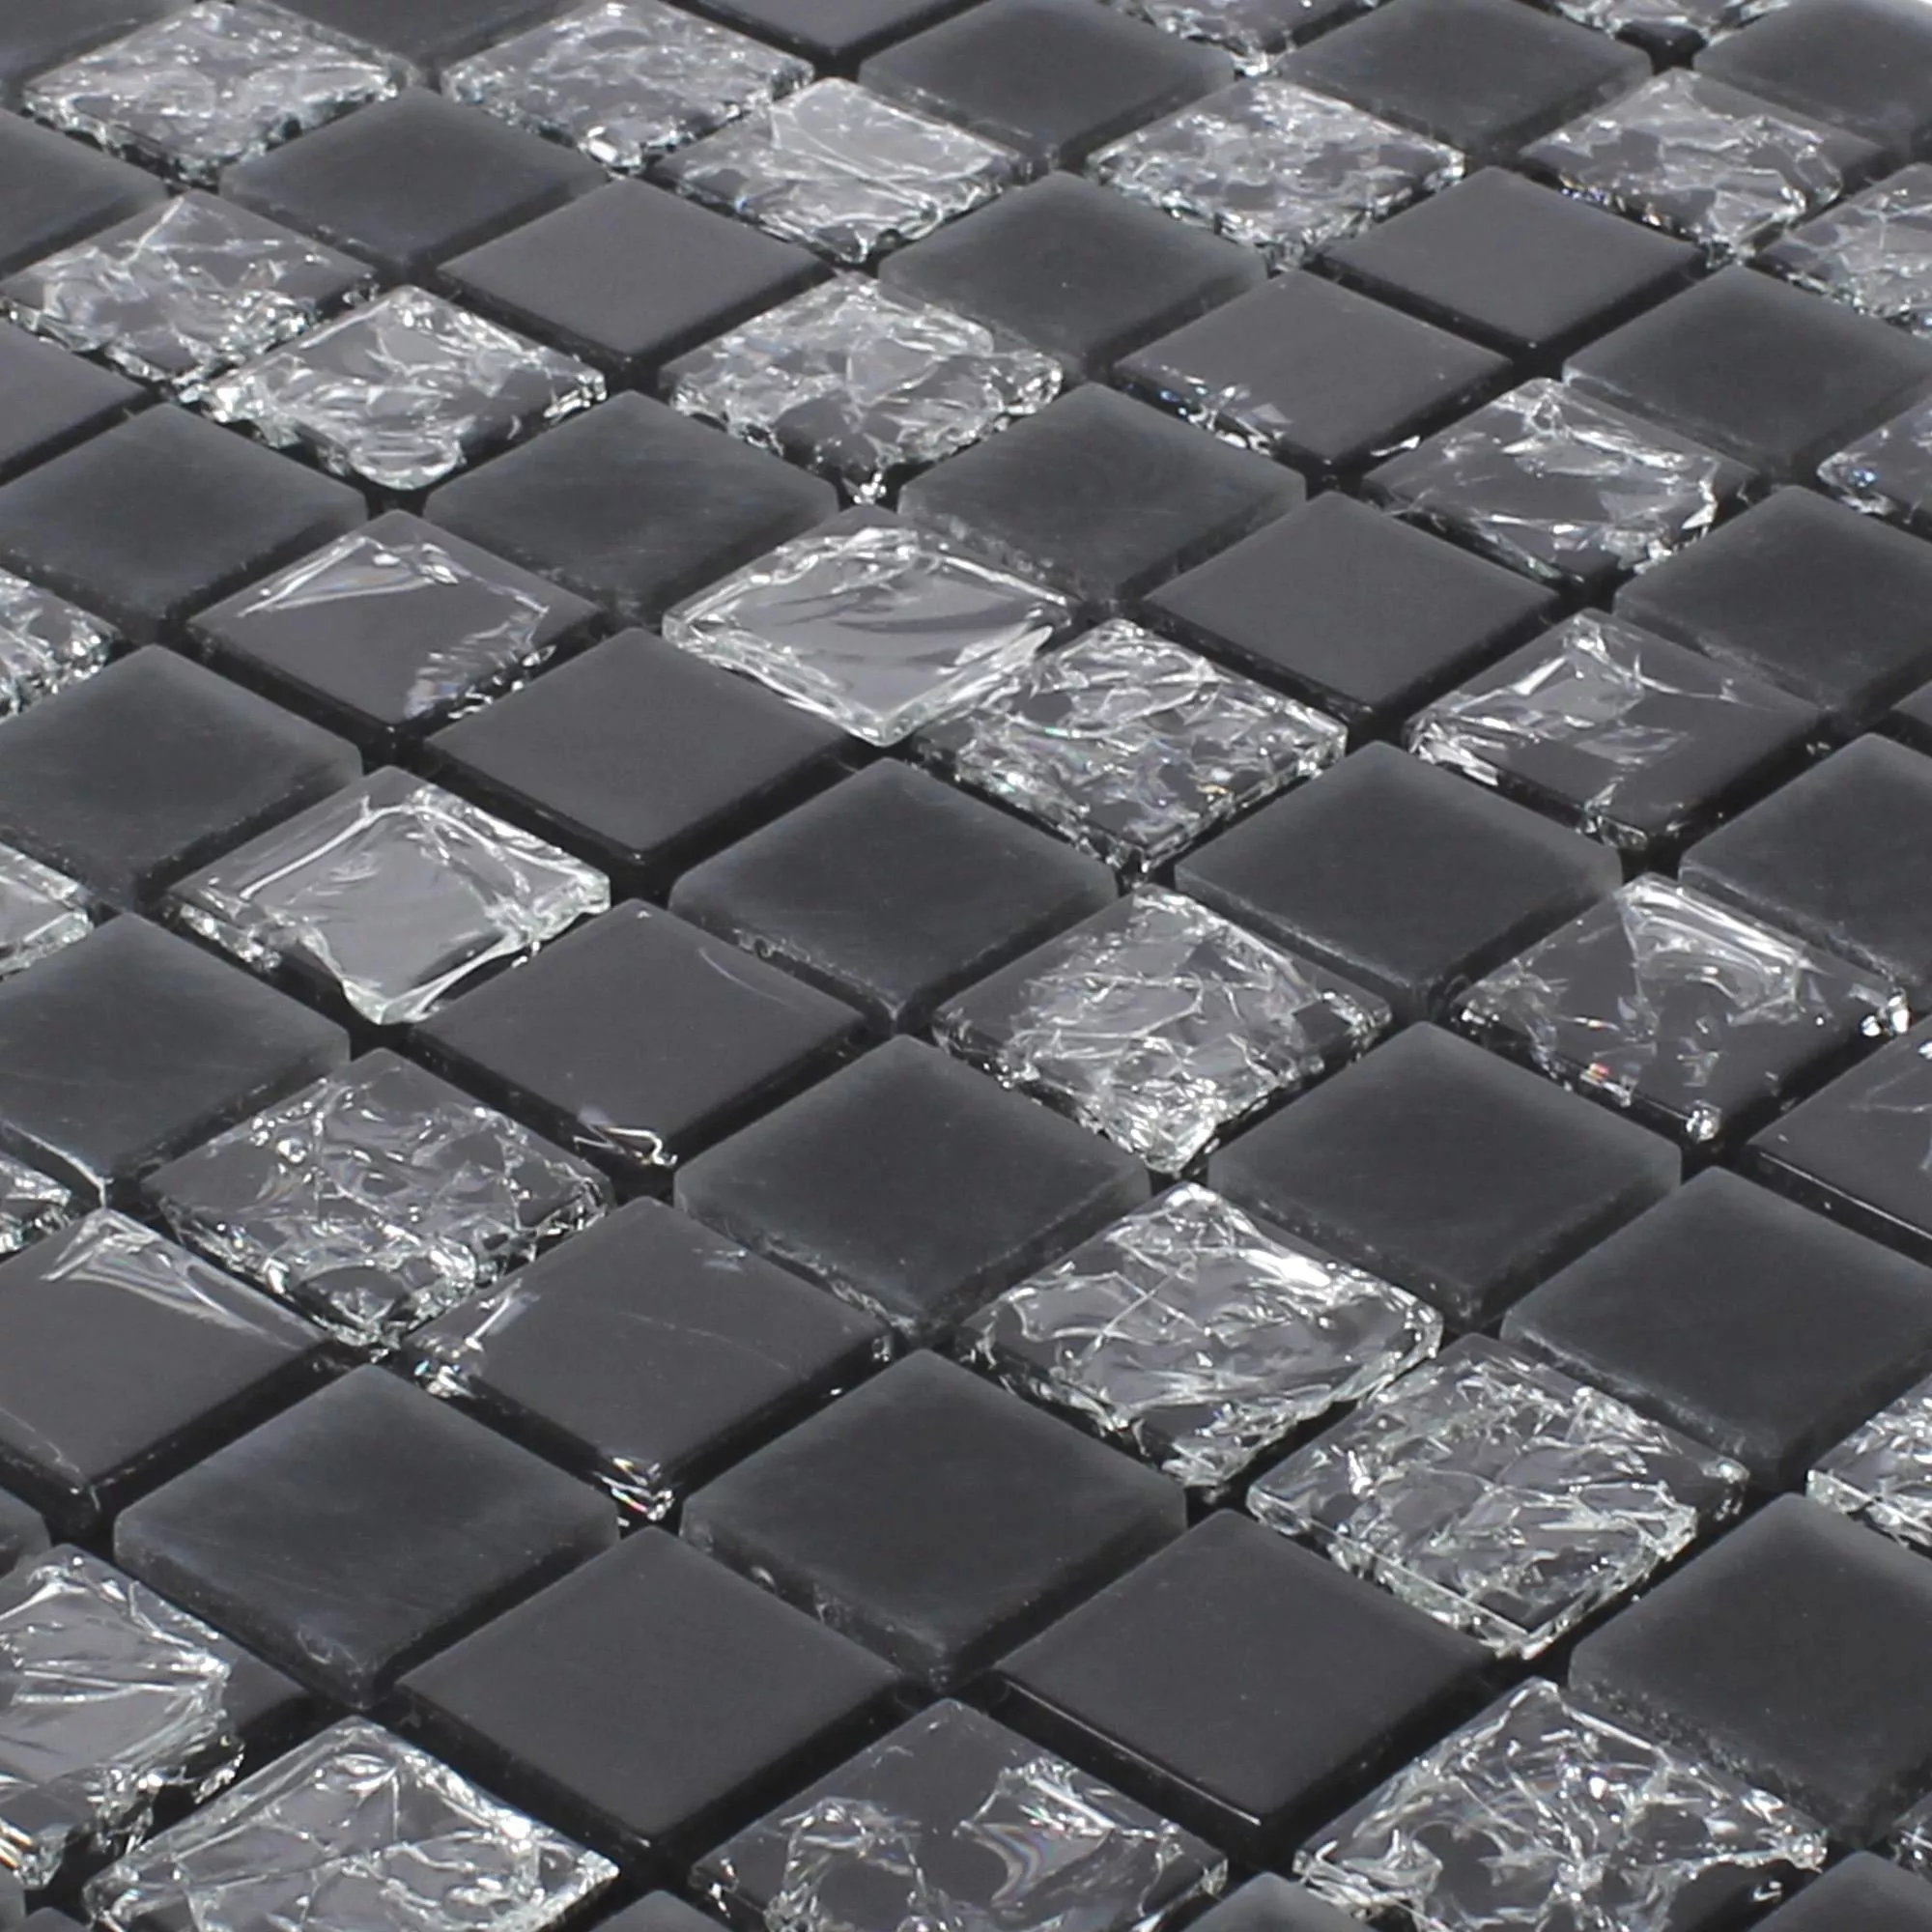 Sample Mosaic Tiles Self Adhesive Kastos Black